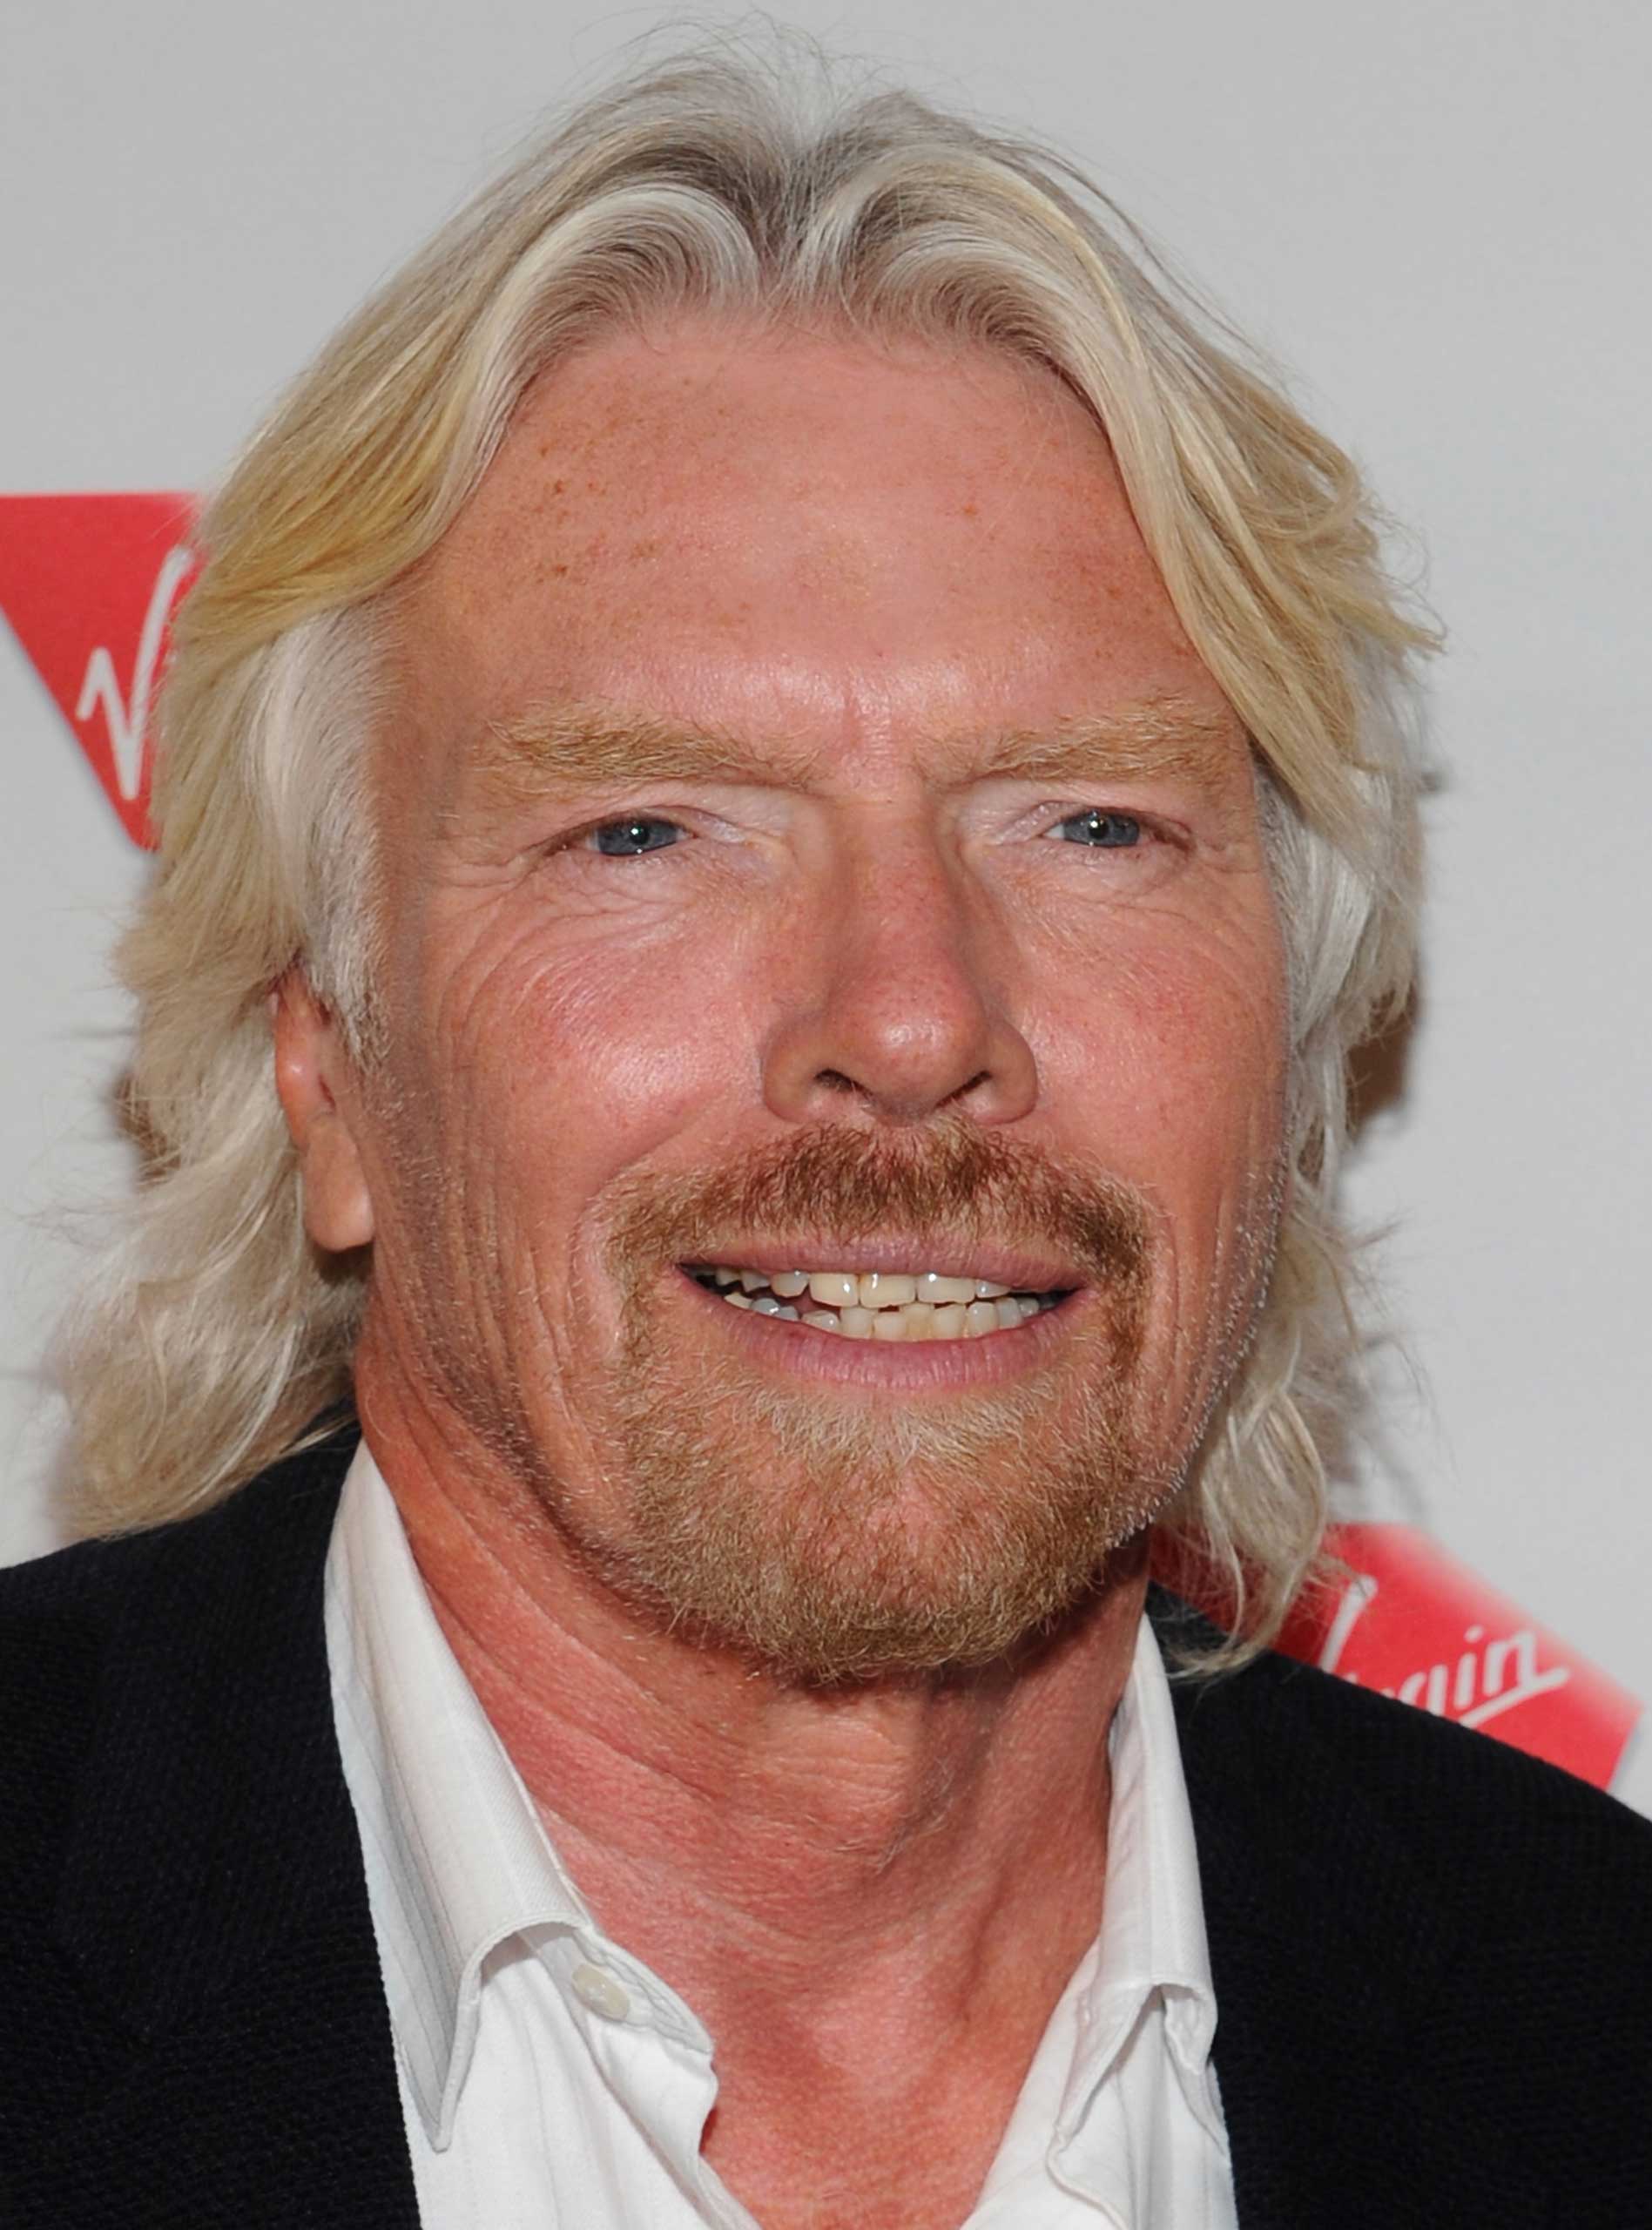 Virgin founder Richard Branson